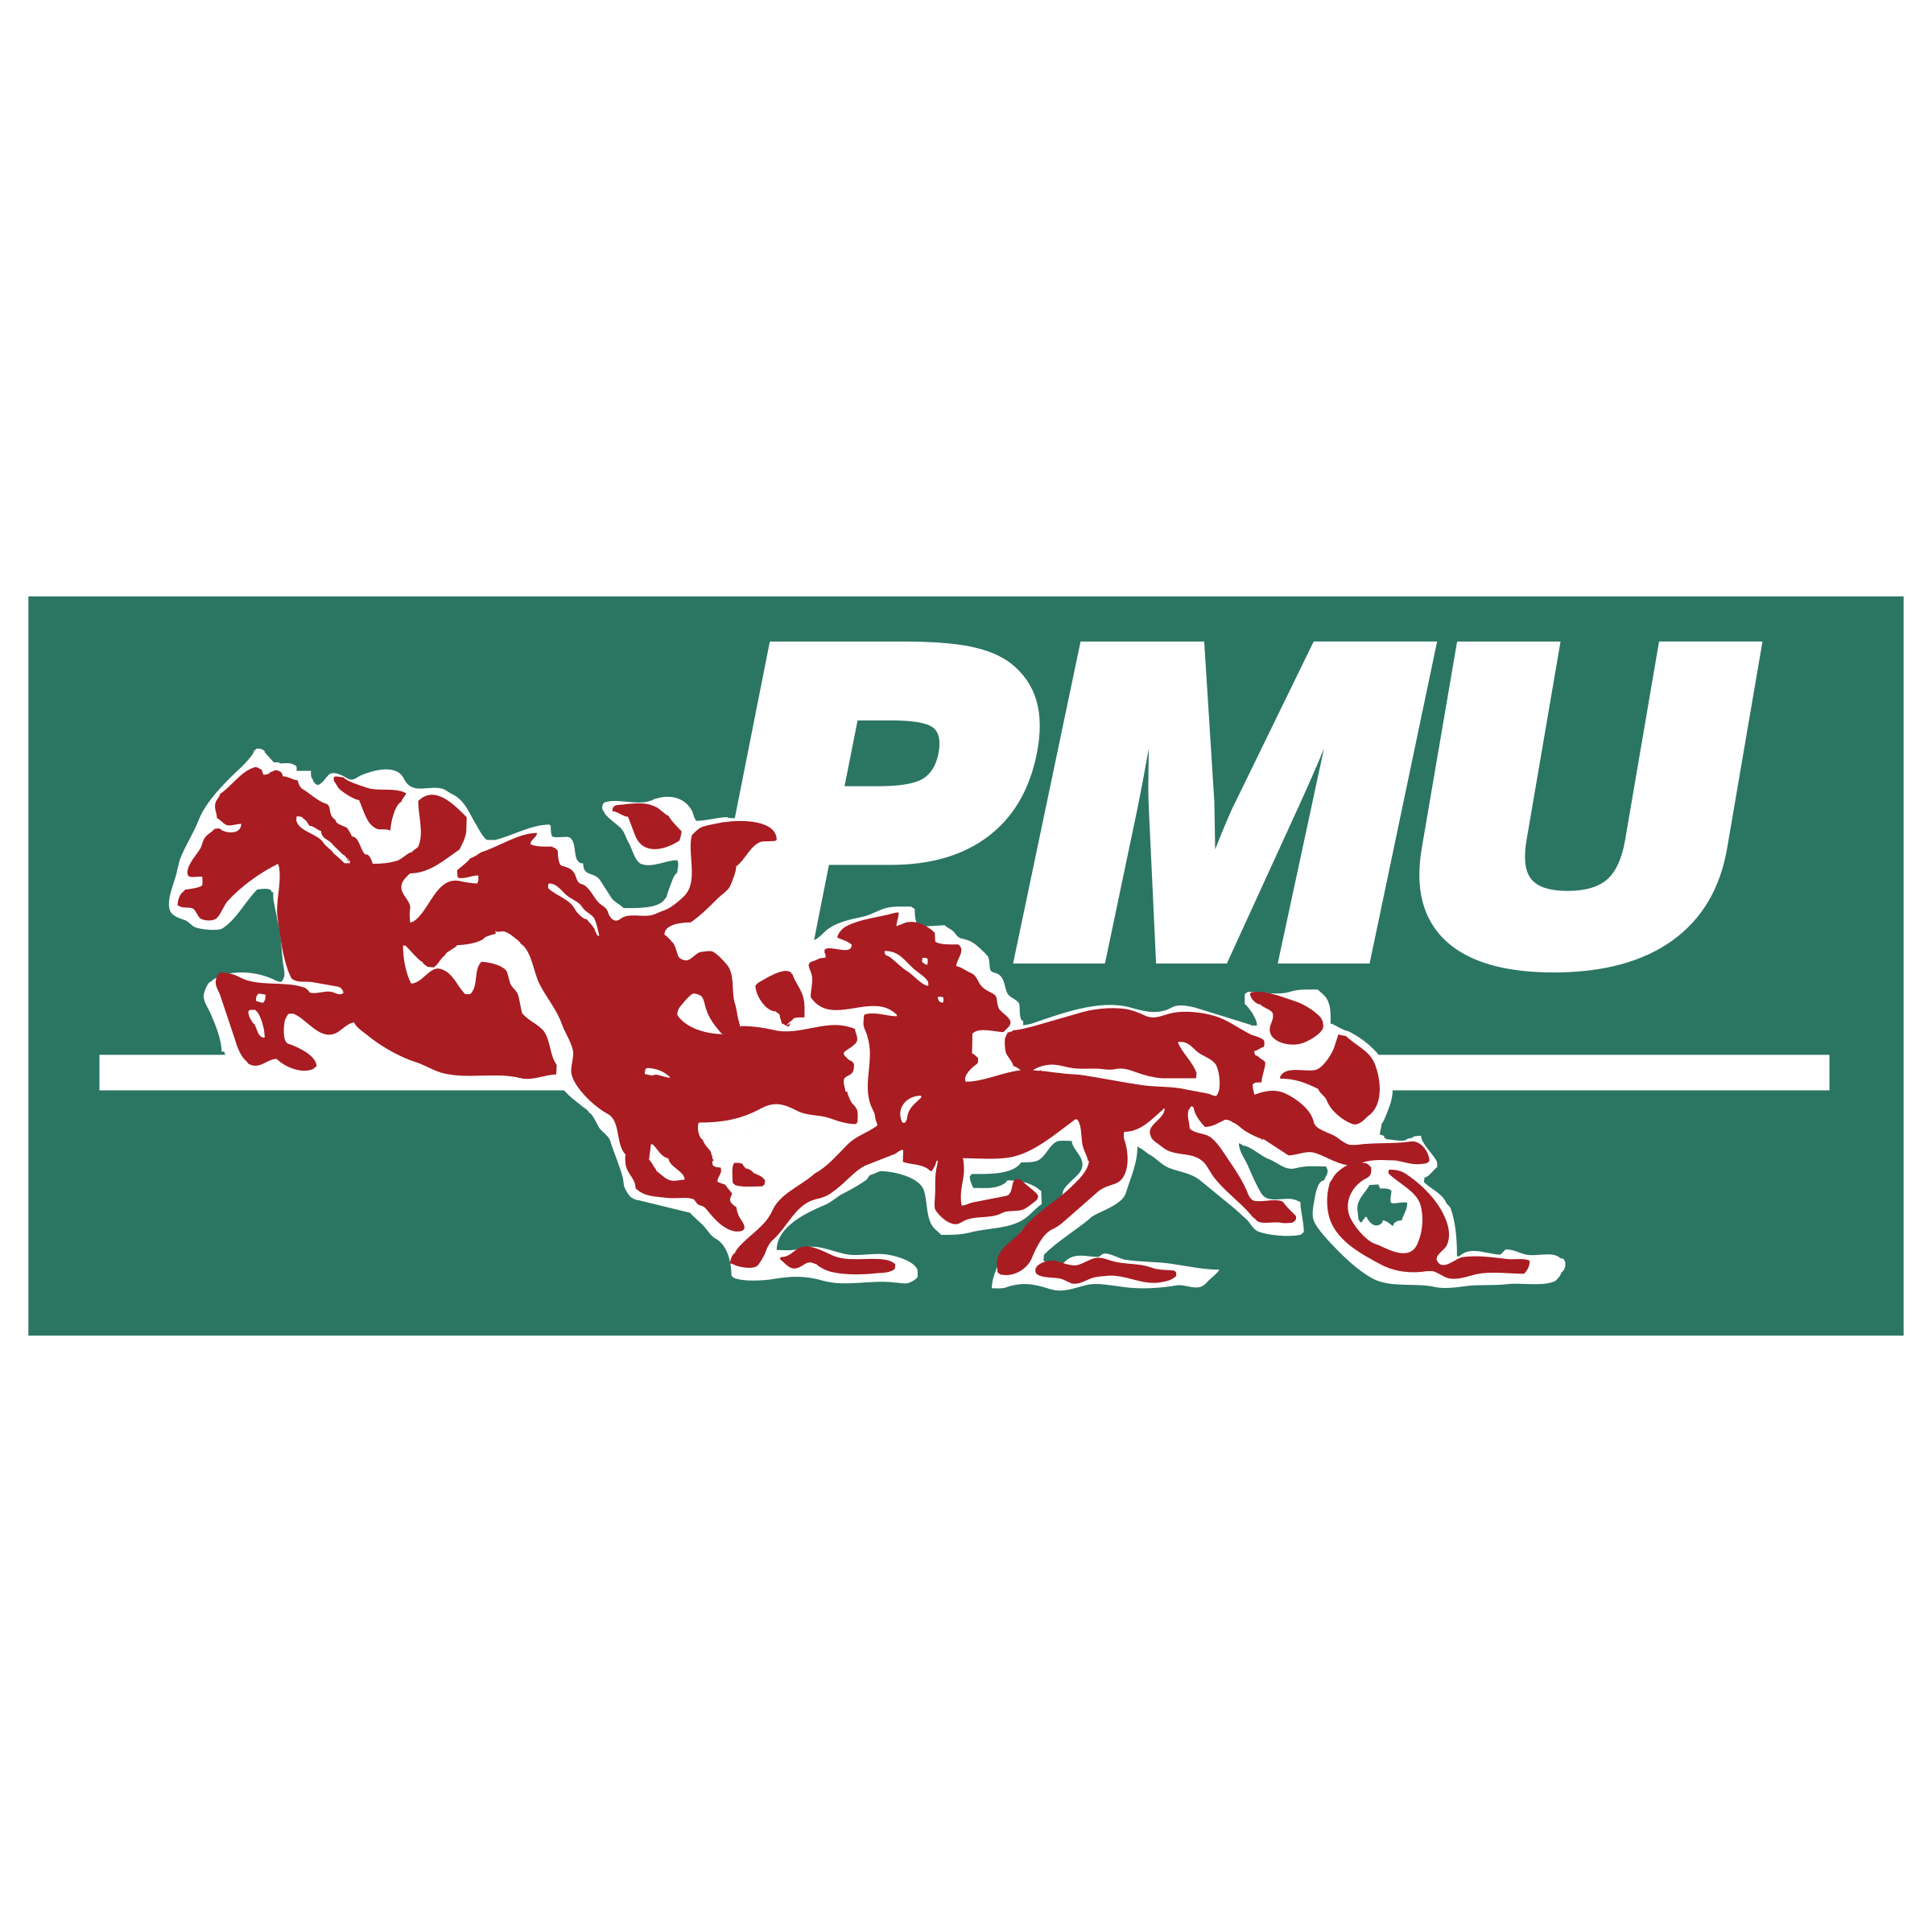 PMU Logo PNG Transparent & SVG Vector.